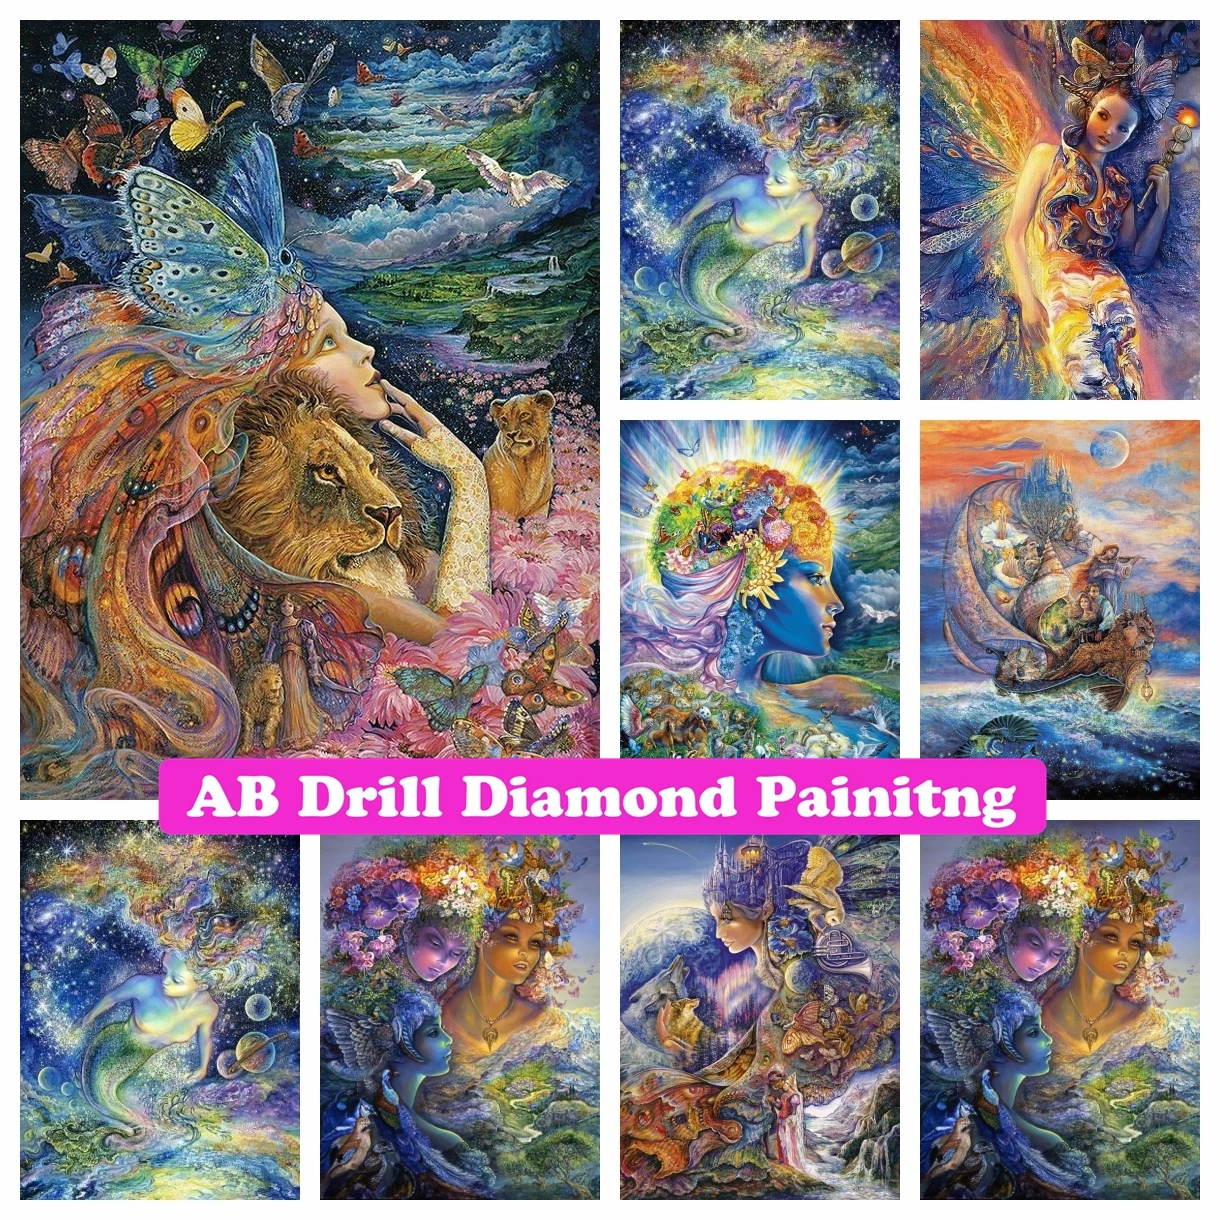 

Dream Myth Fairy 5D DIY AB Drills Diamond Painting Rhinestone Cross Stitch Butterfly Fantasy Embroidery Hobby Craft Home Decor